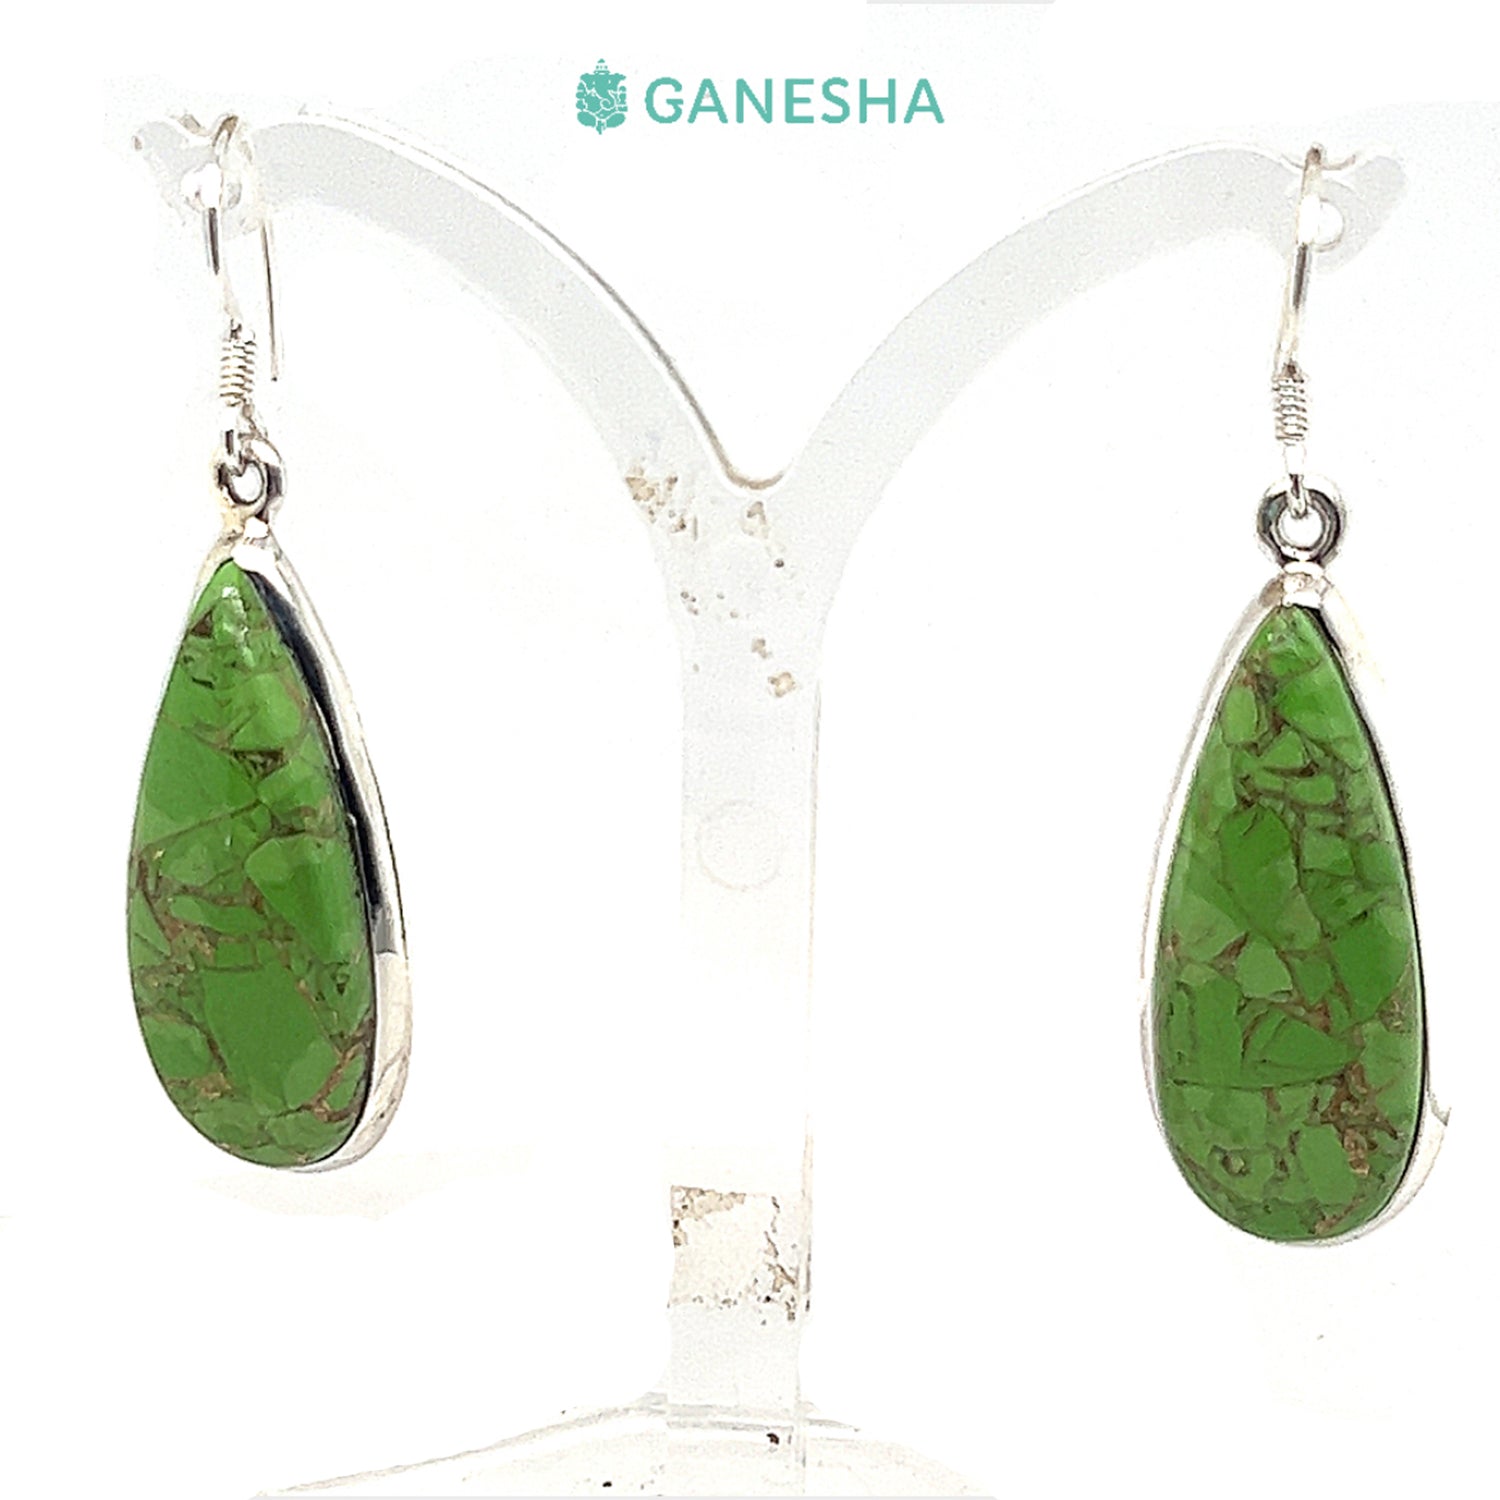 Ganesha Handicrafts, Green Turquoise Earrings - Sterling Silver (925), Green Turquoise Earrings, Women's Fashion Earrings, Trending Silver Earrings, Green Colour Silver Earrings.